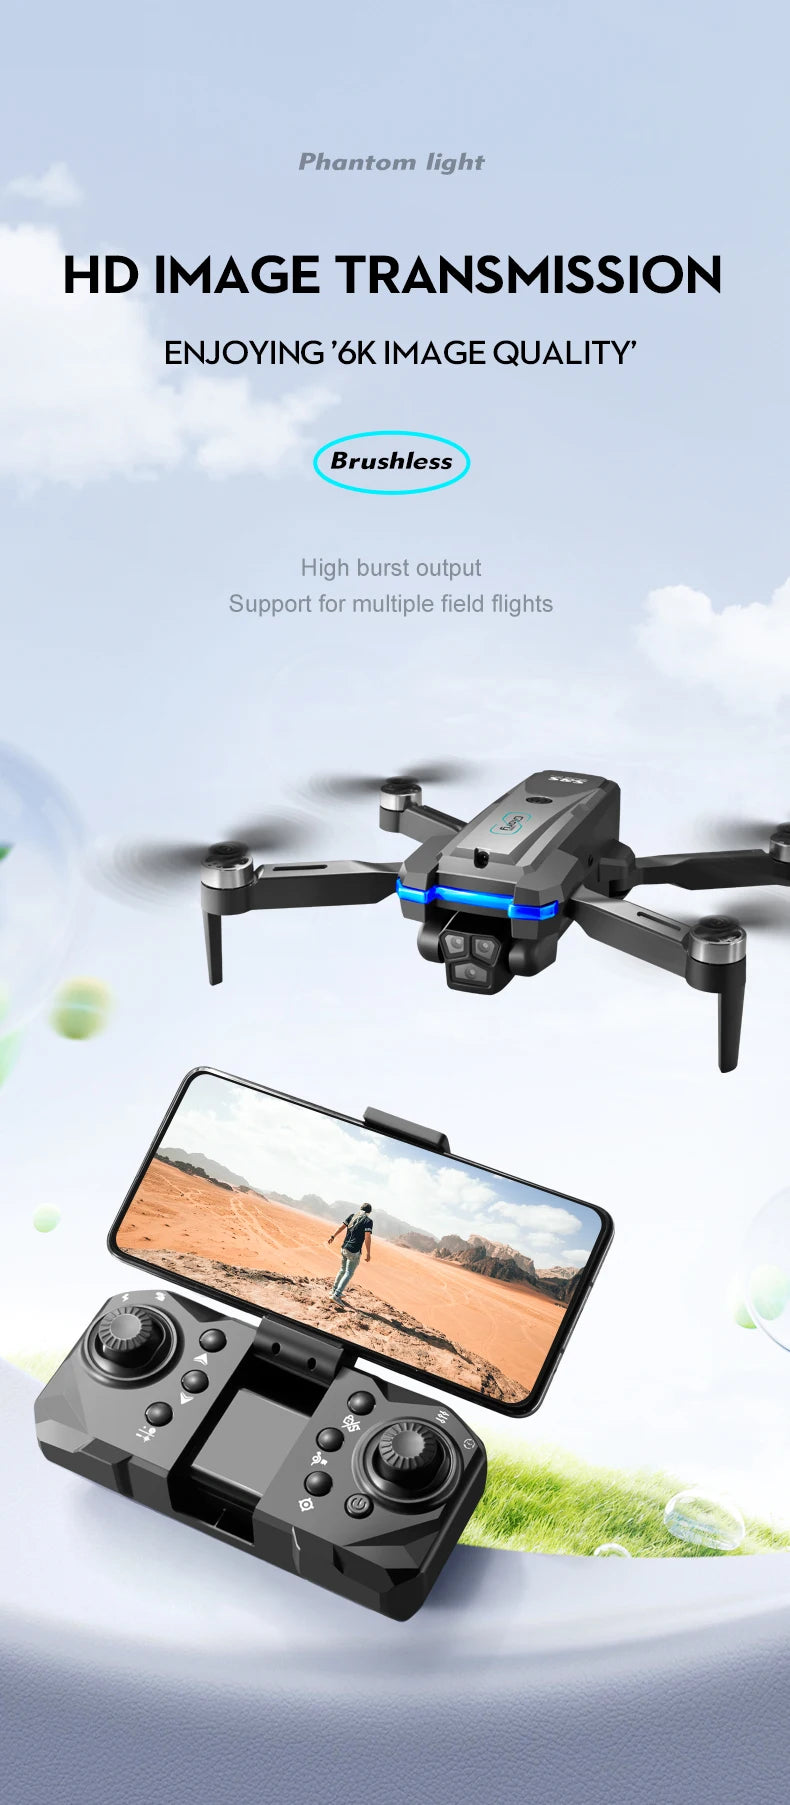 S8S Drone, Phantom light HD IMAGE TRANSMISSION ENJOYING '6K 